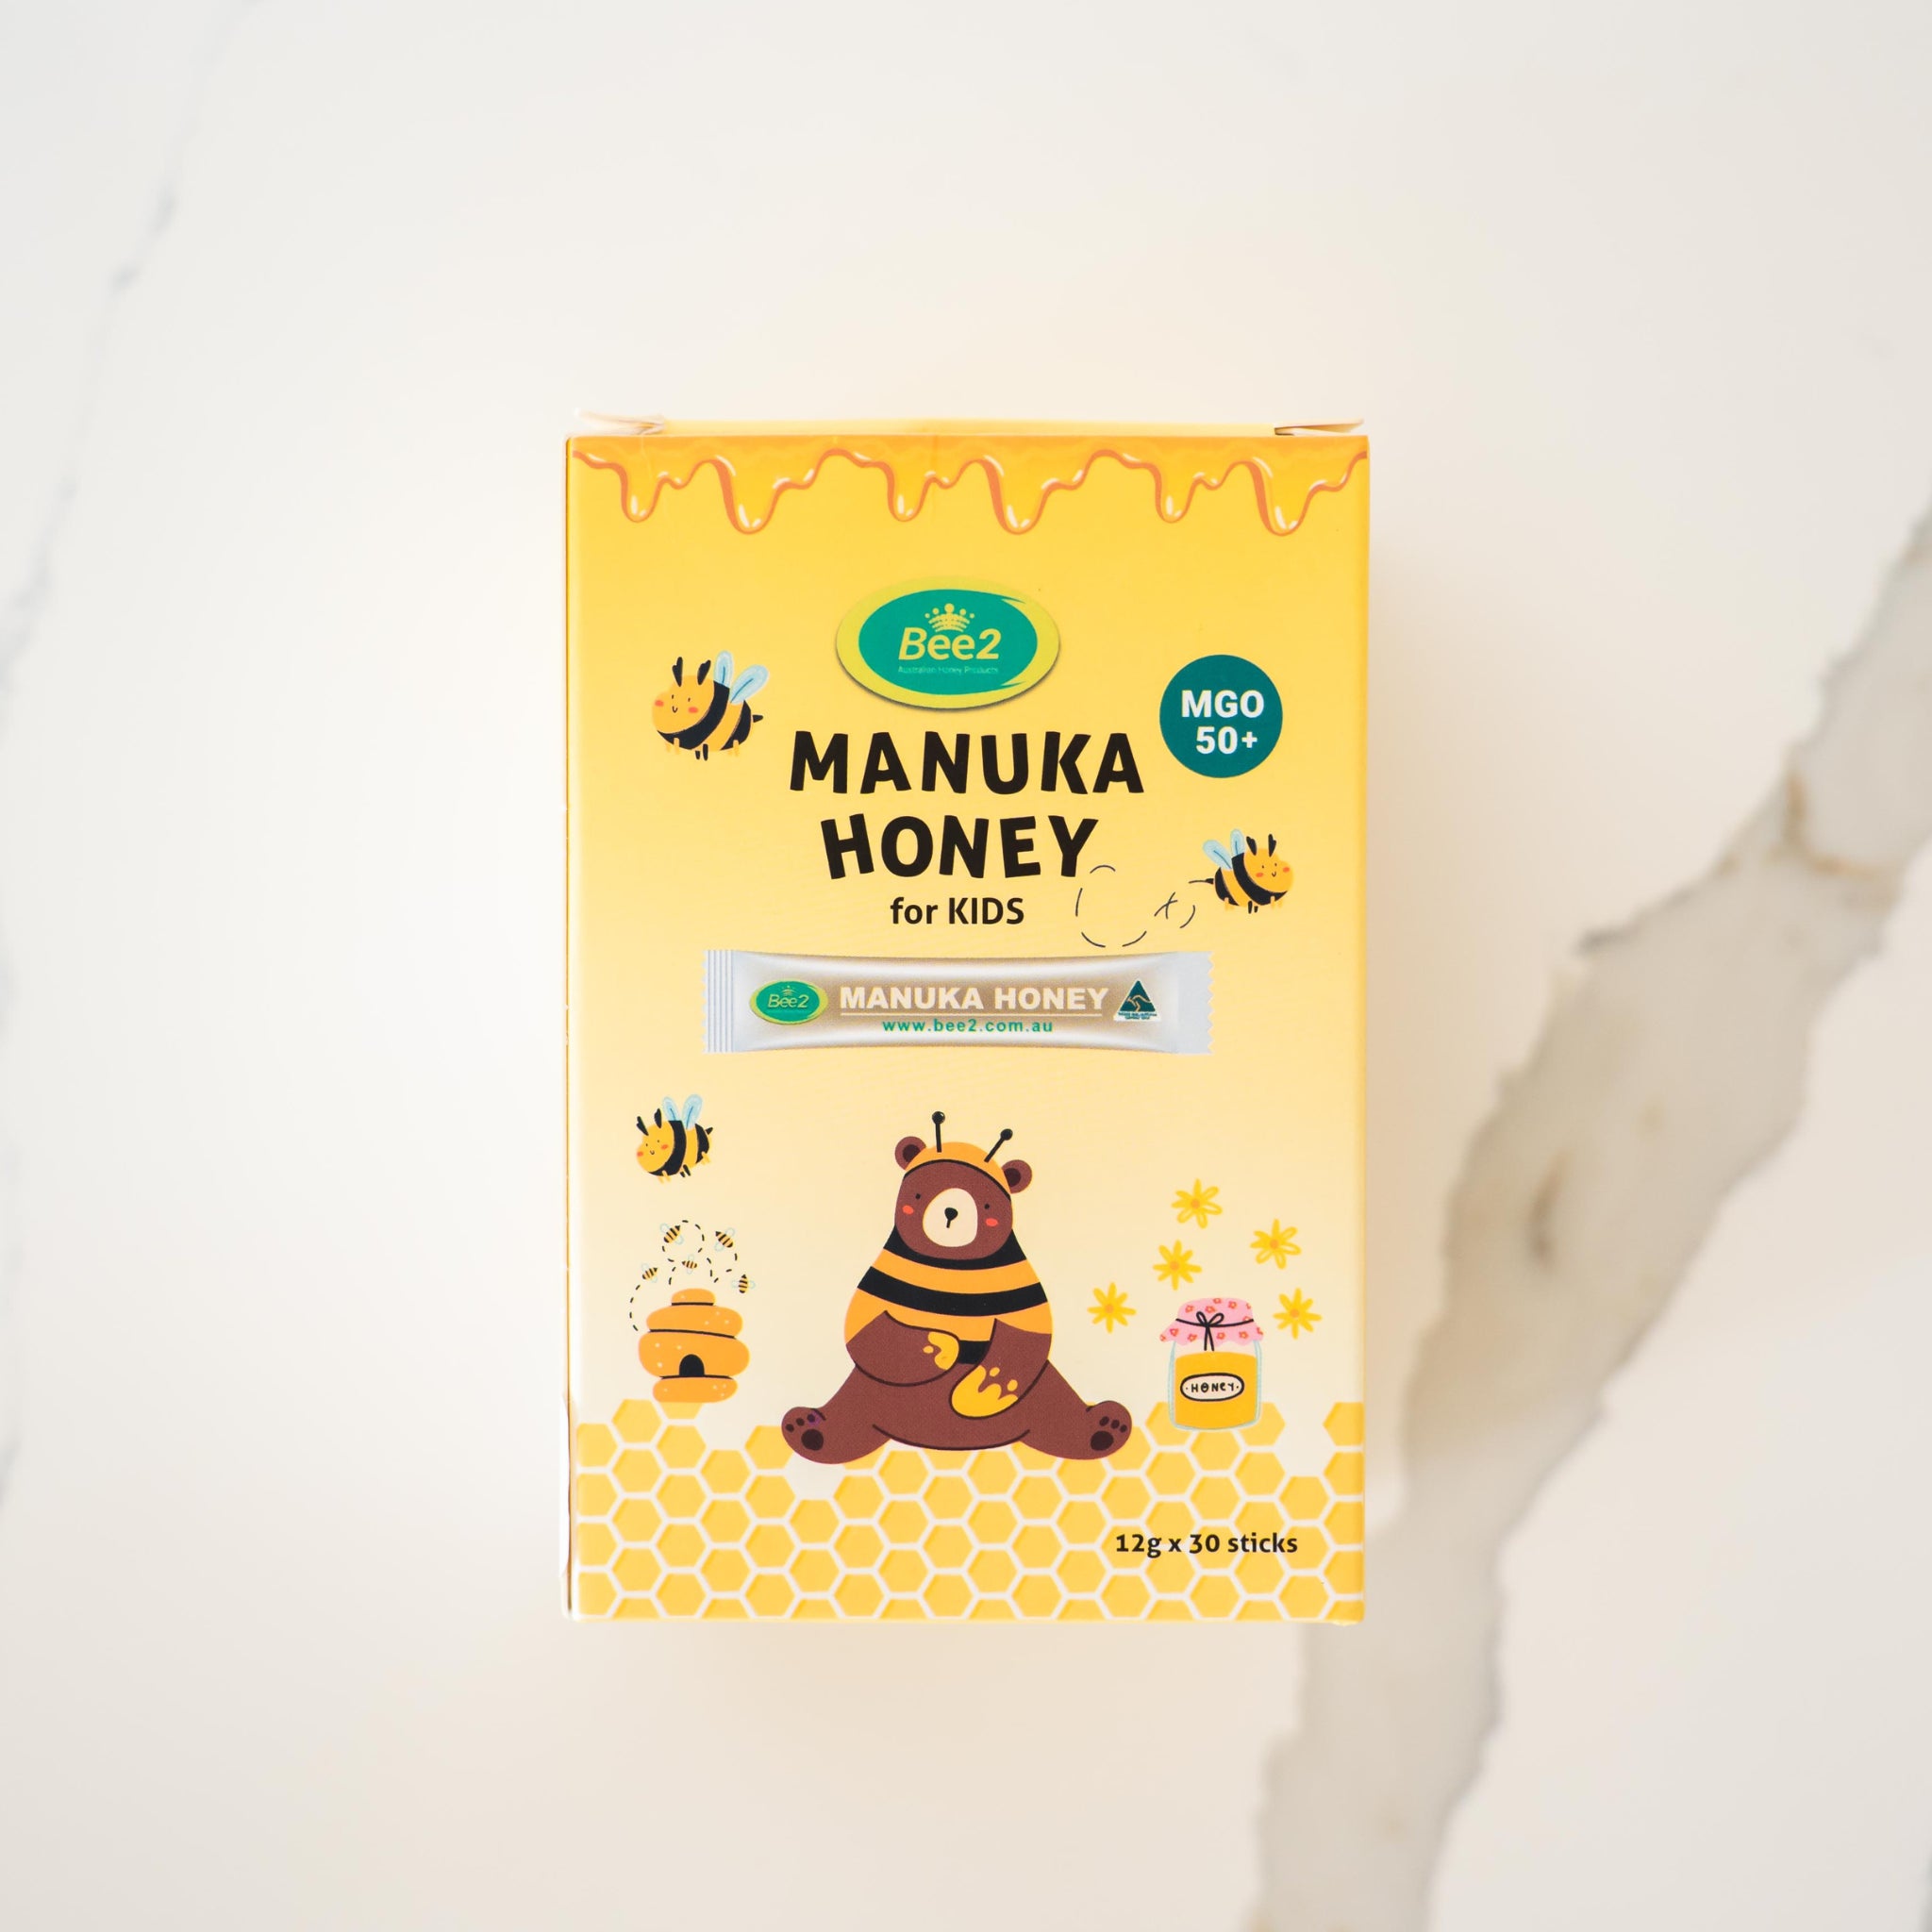 Bee2 Manuka Honey For Kids MGO 50+